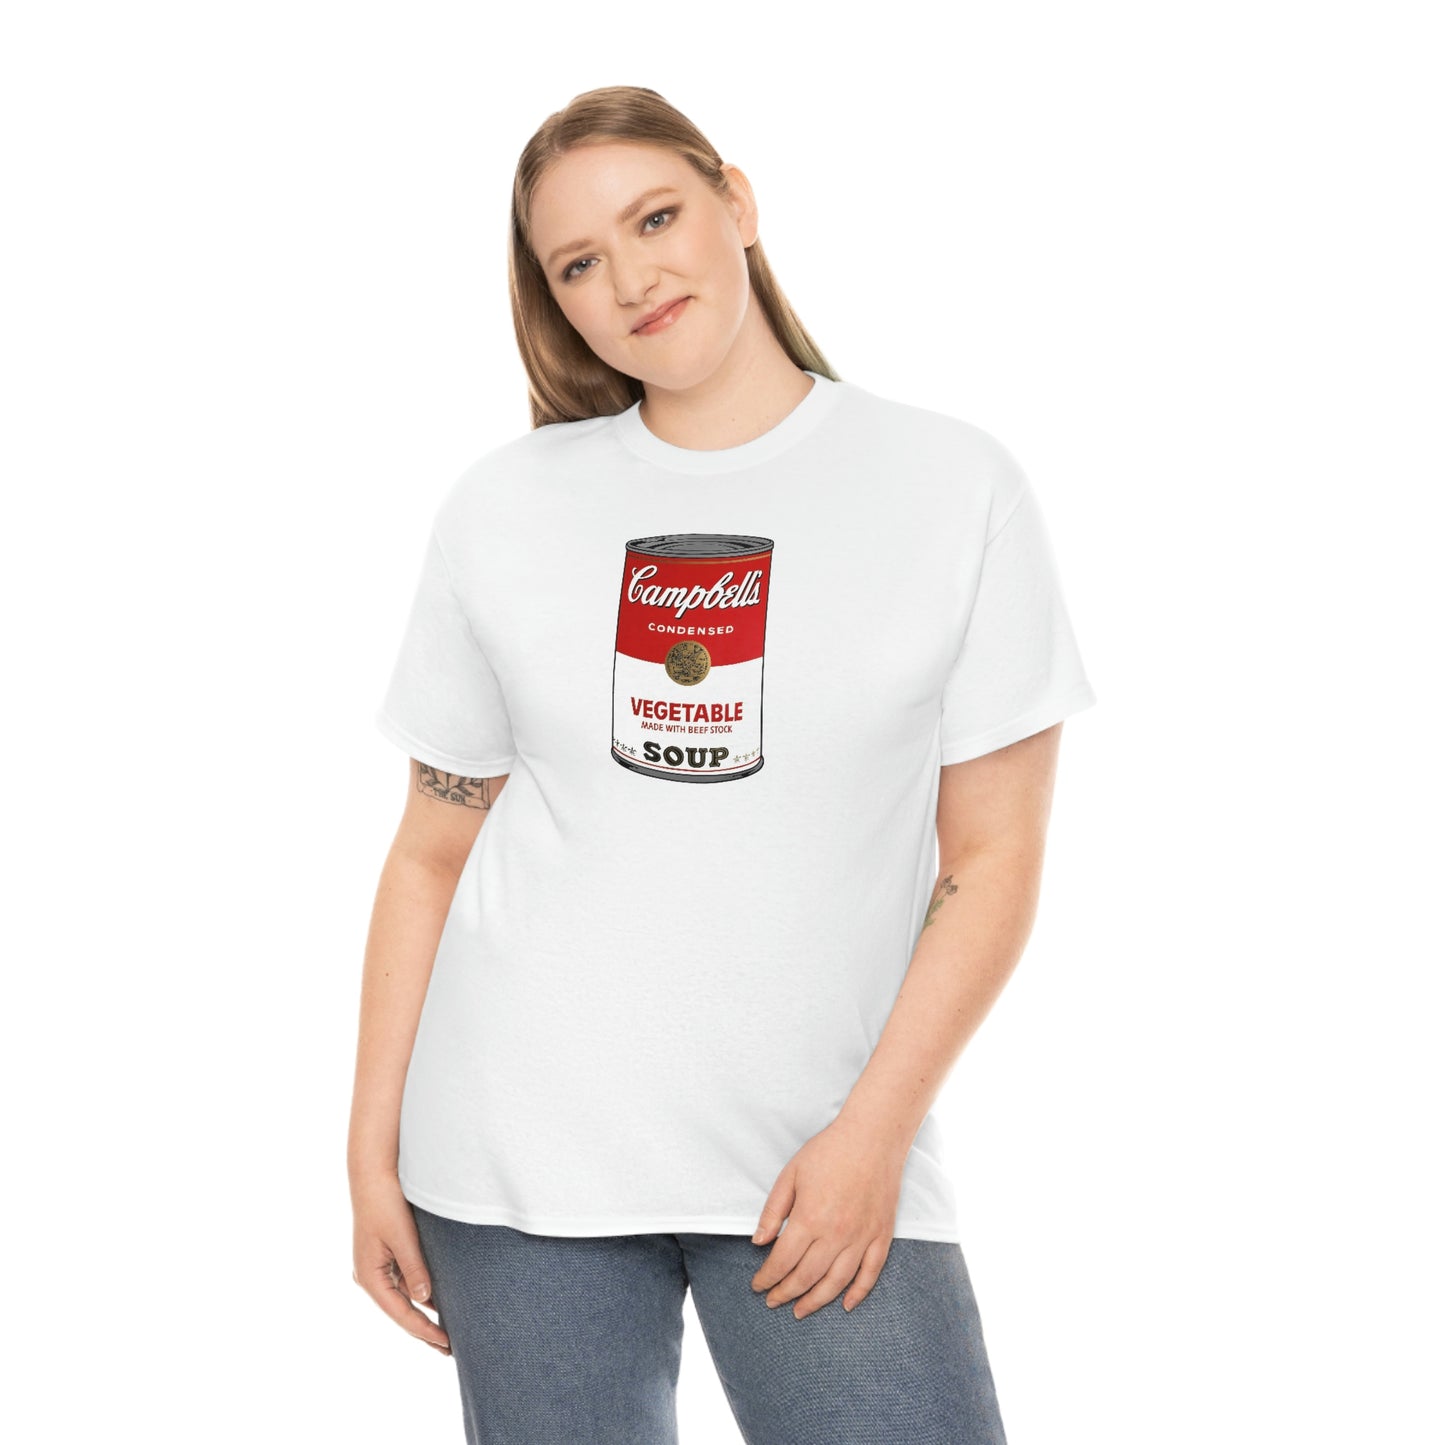 Campbell's Soup T-Shirt